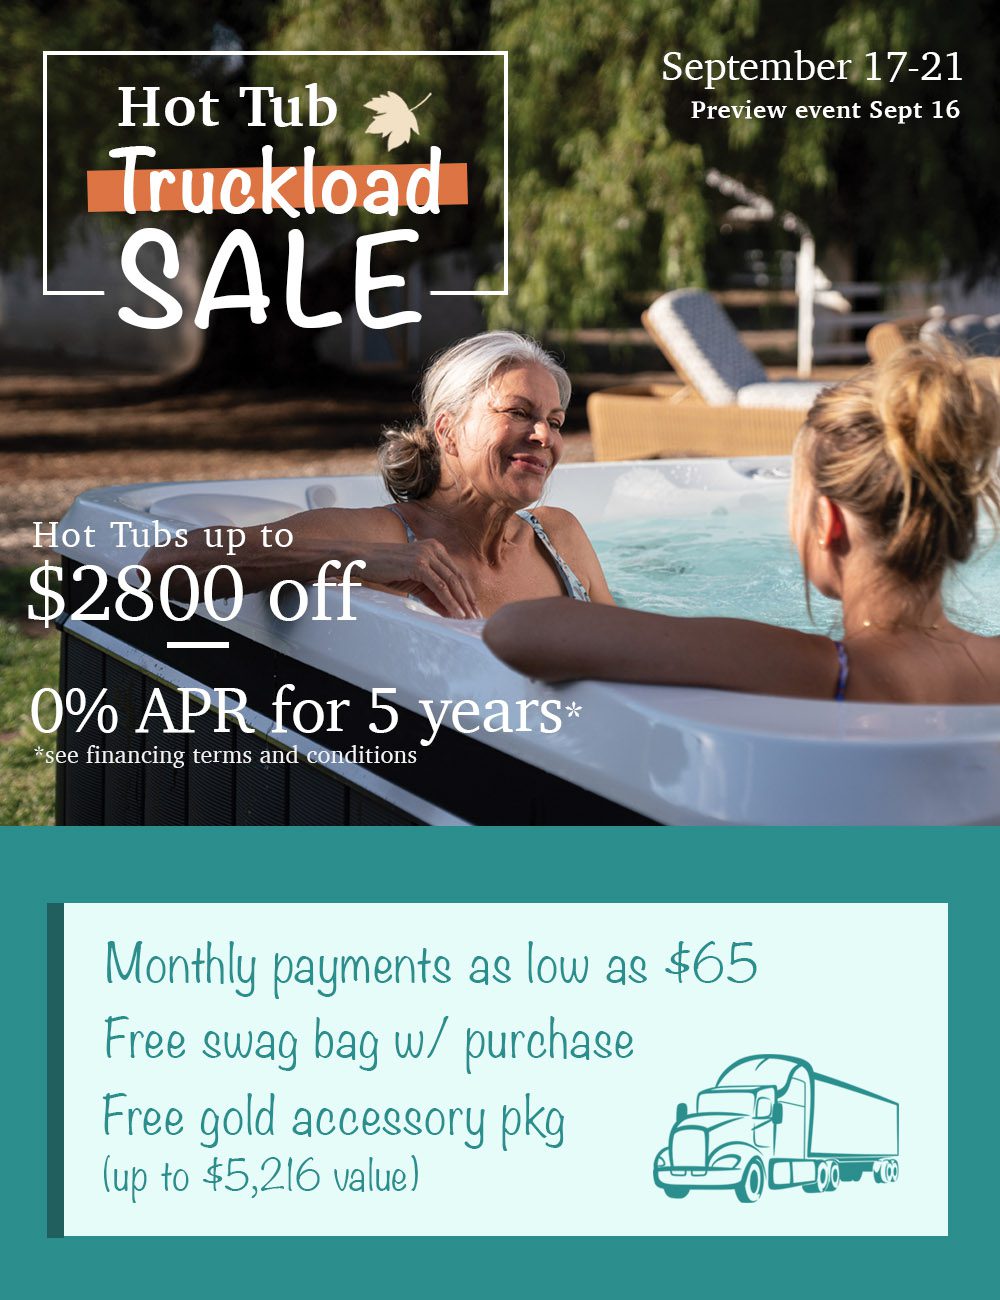 Hot Tub Truckload Sale